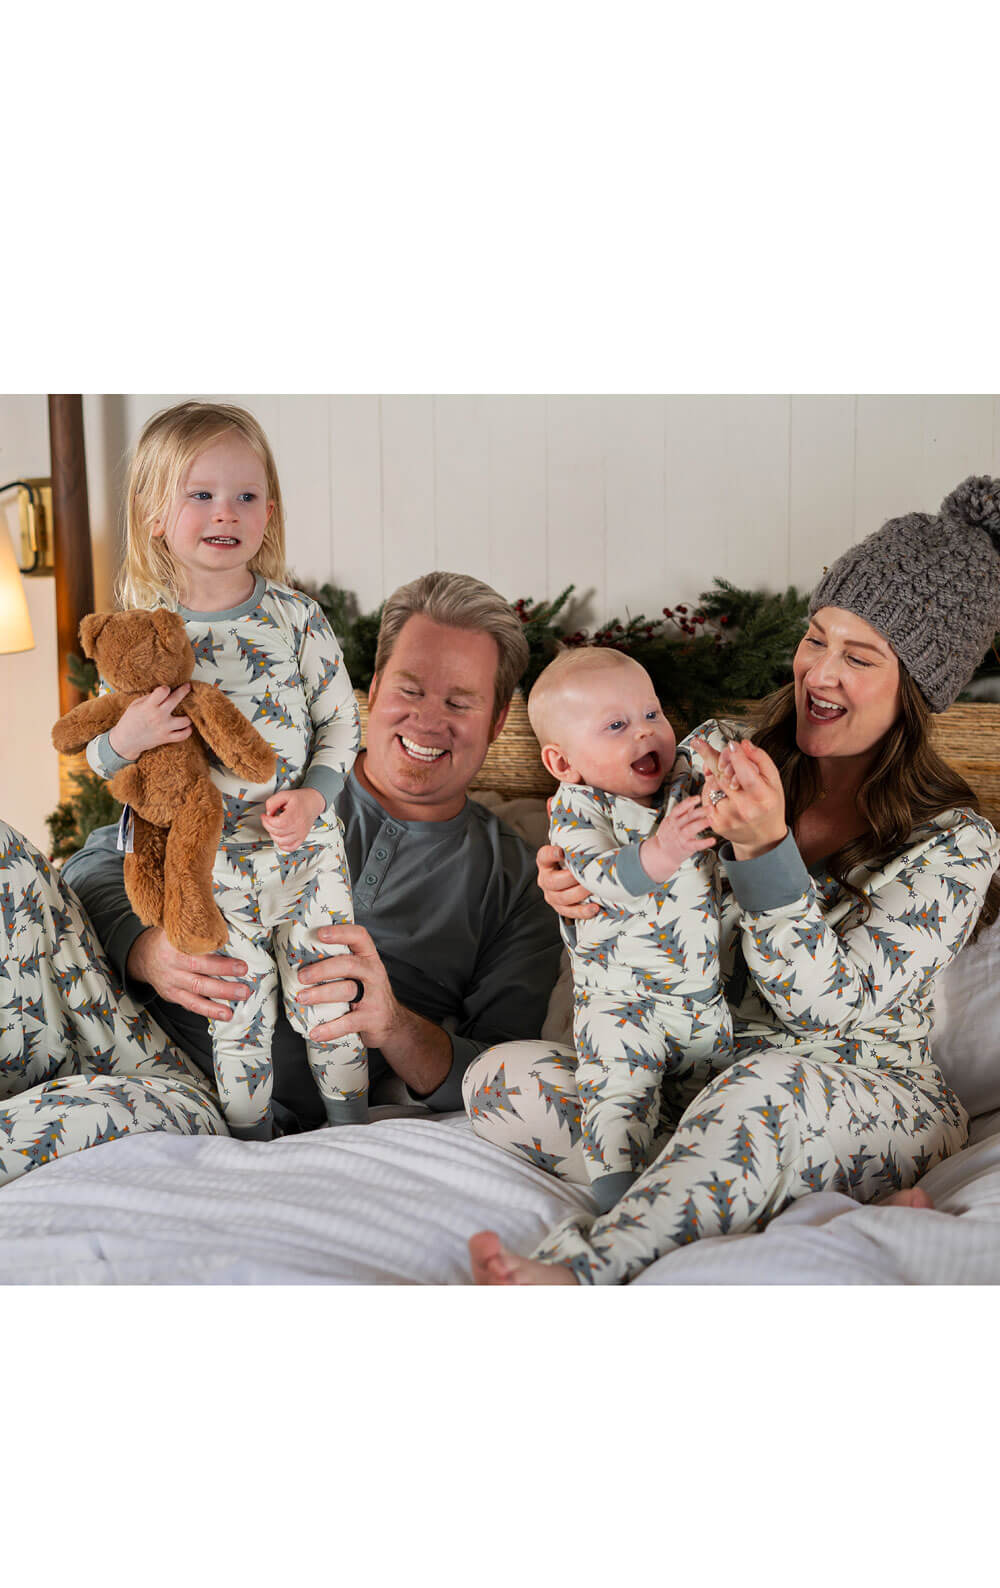 Pijama familiar com estampa de árvore de Natal